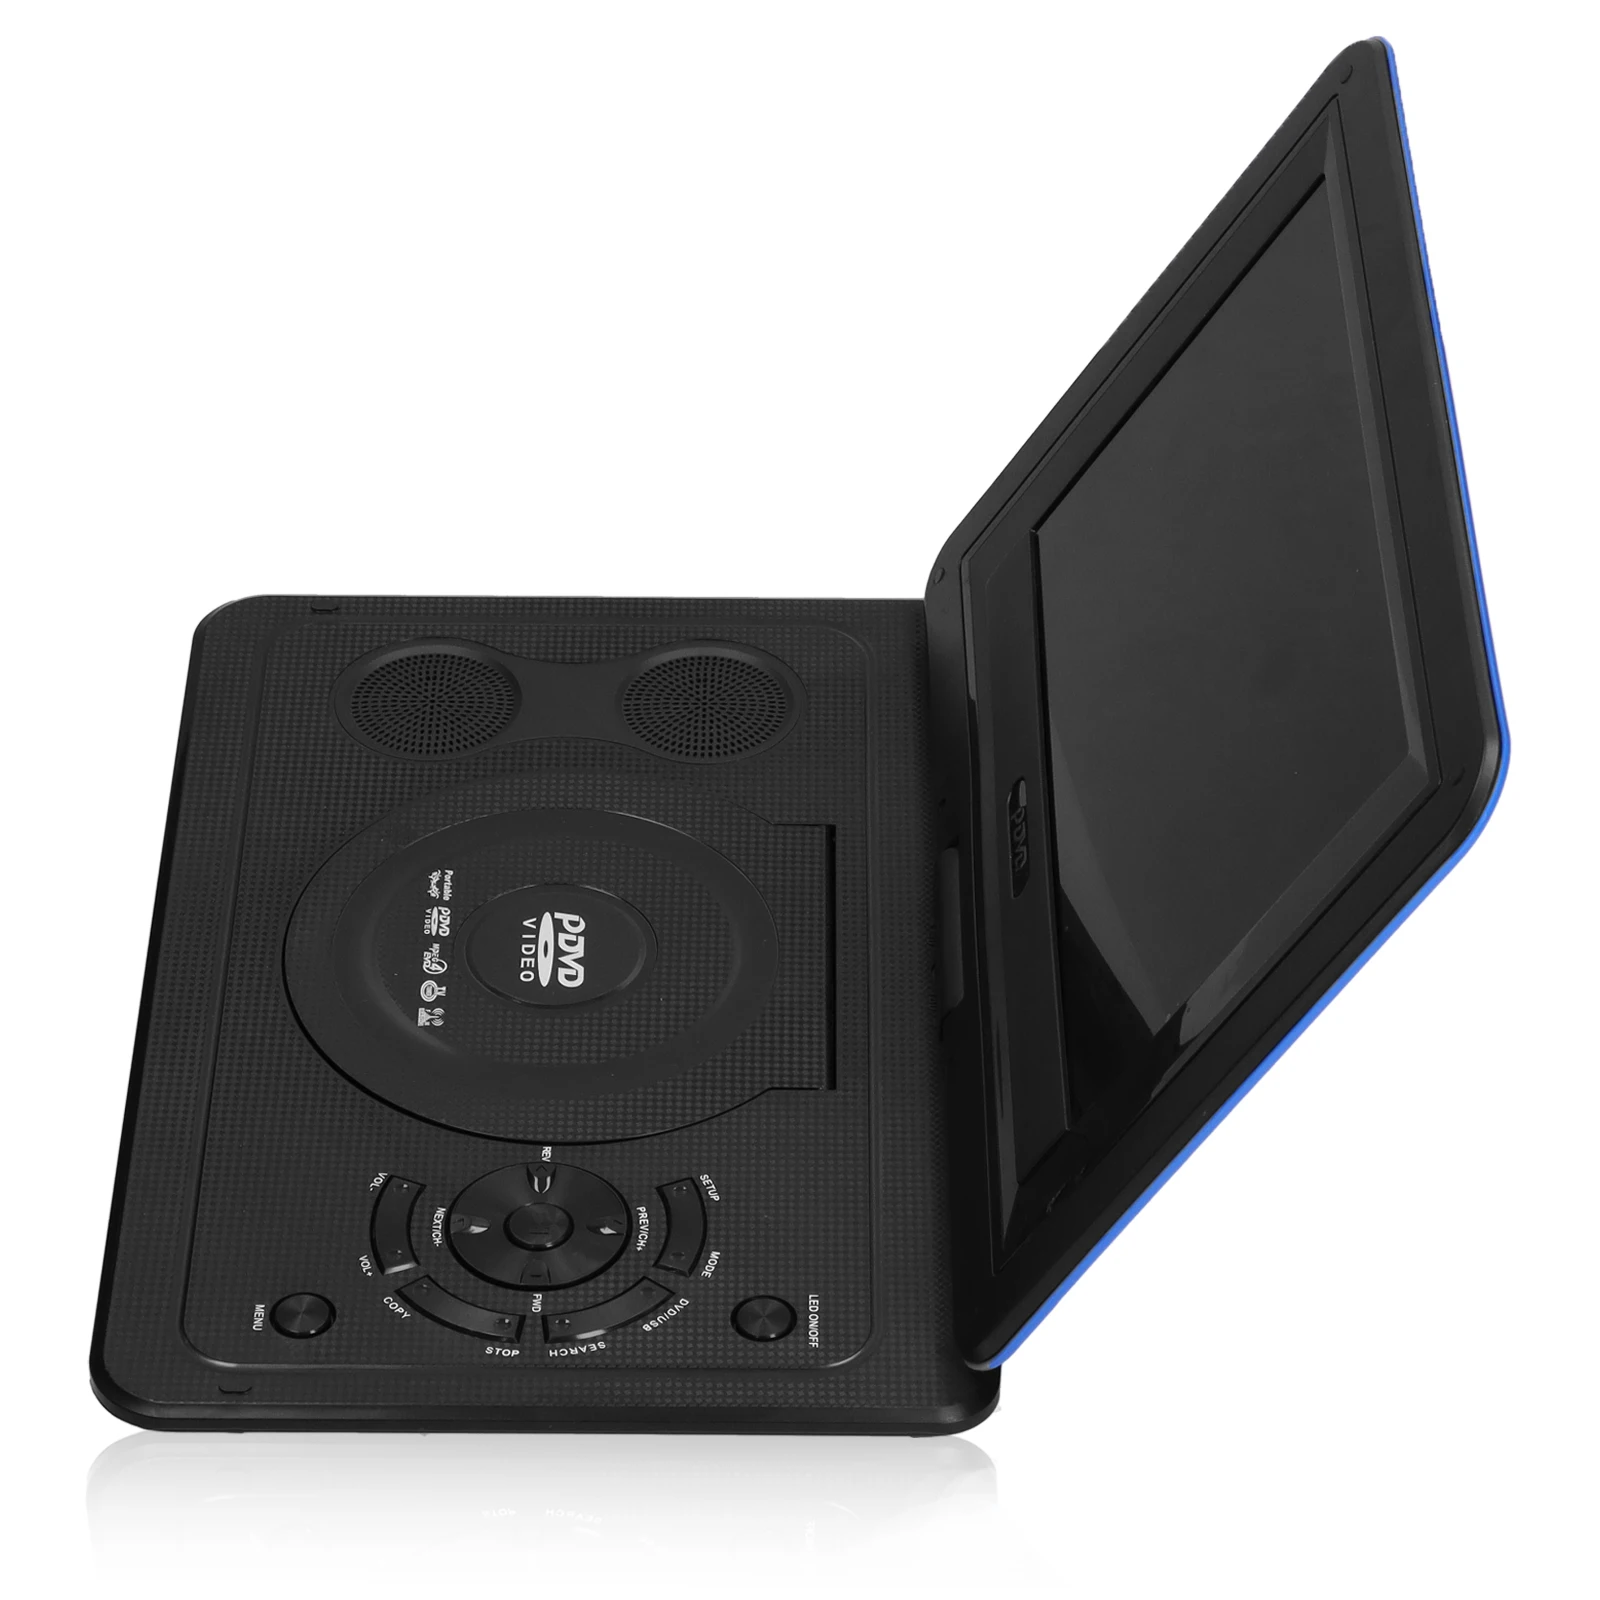 Reproductor de DVD portátil para coche, pantalla giratoria USB de 13,9 pulgadas, VCD, juego, TV, con control remoto, EE. UU./REINO UNIDO/UE